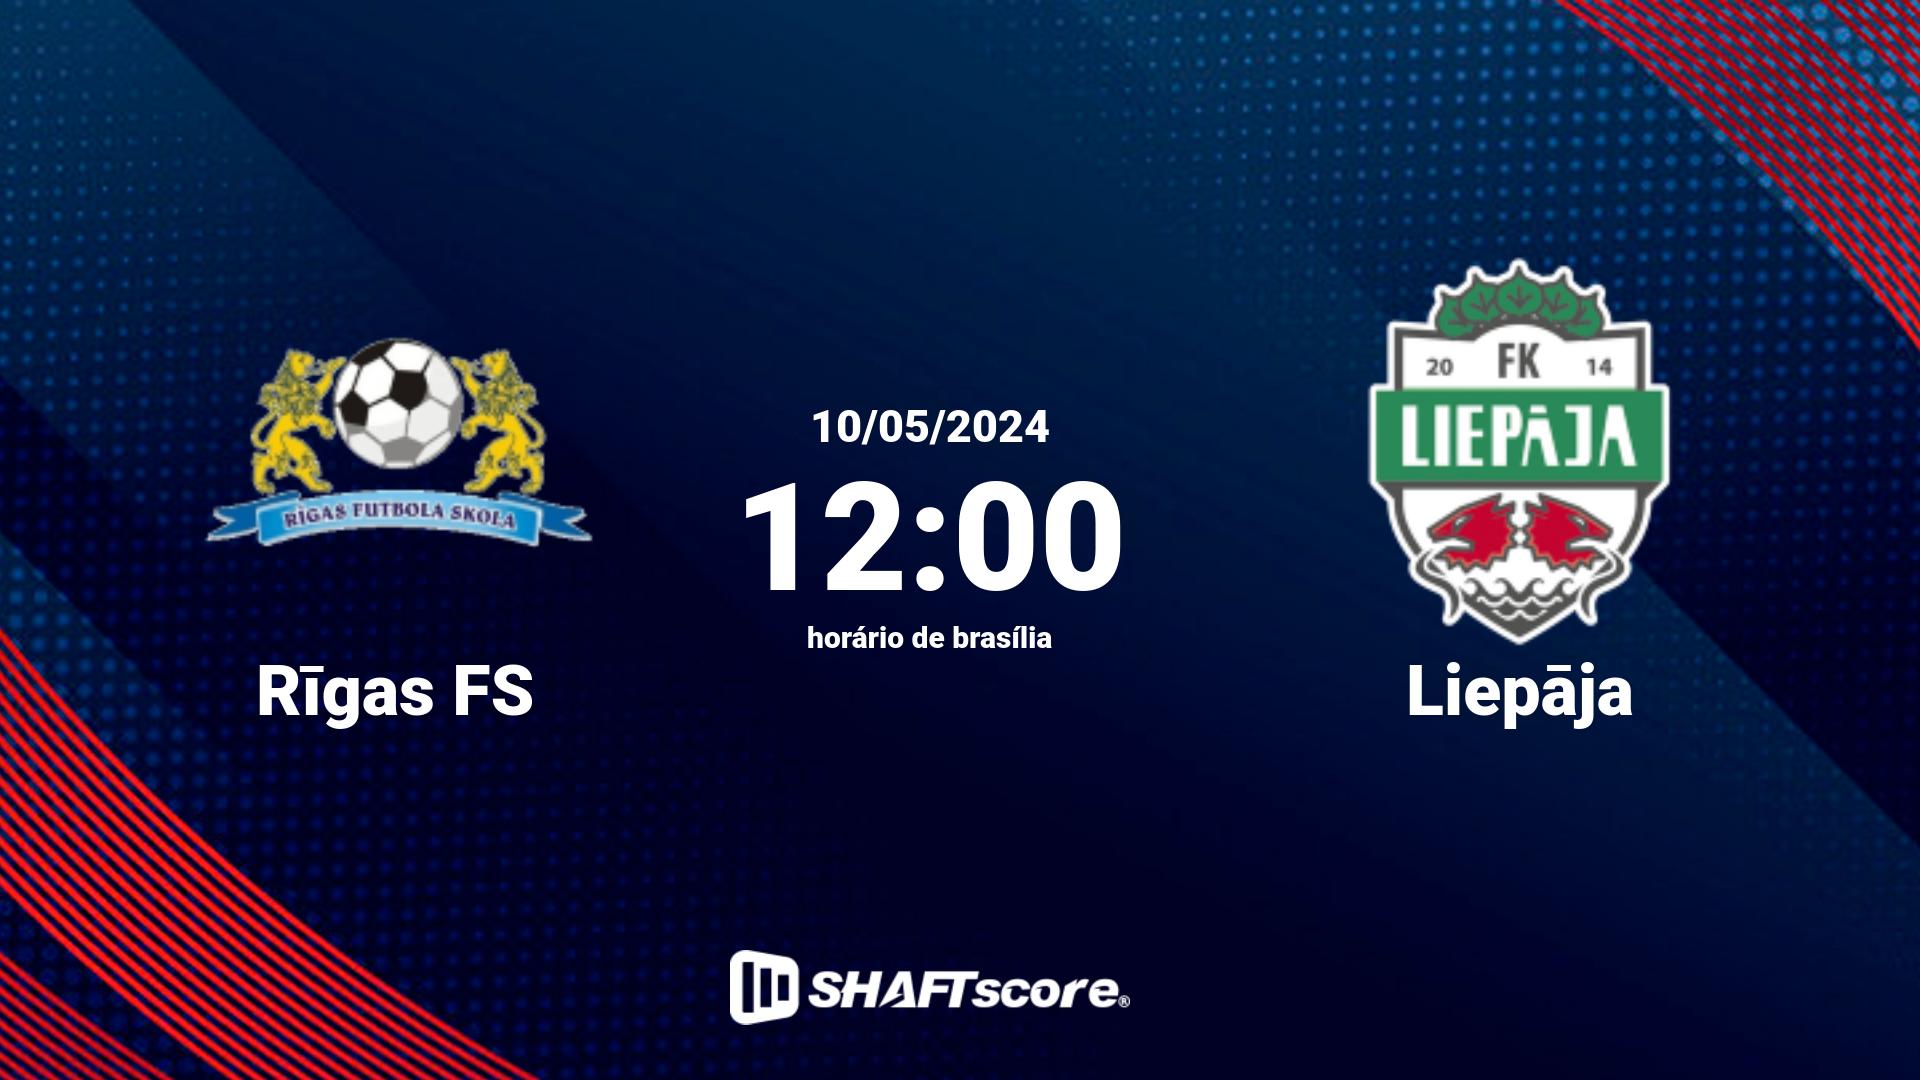 Estatísticas do jogo Rīgas FS vs Liepāja 10.05 12:00